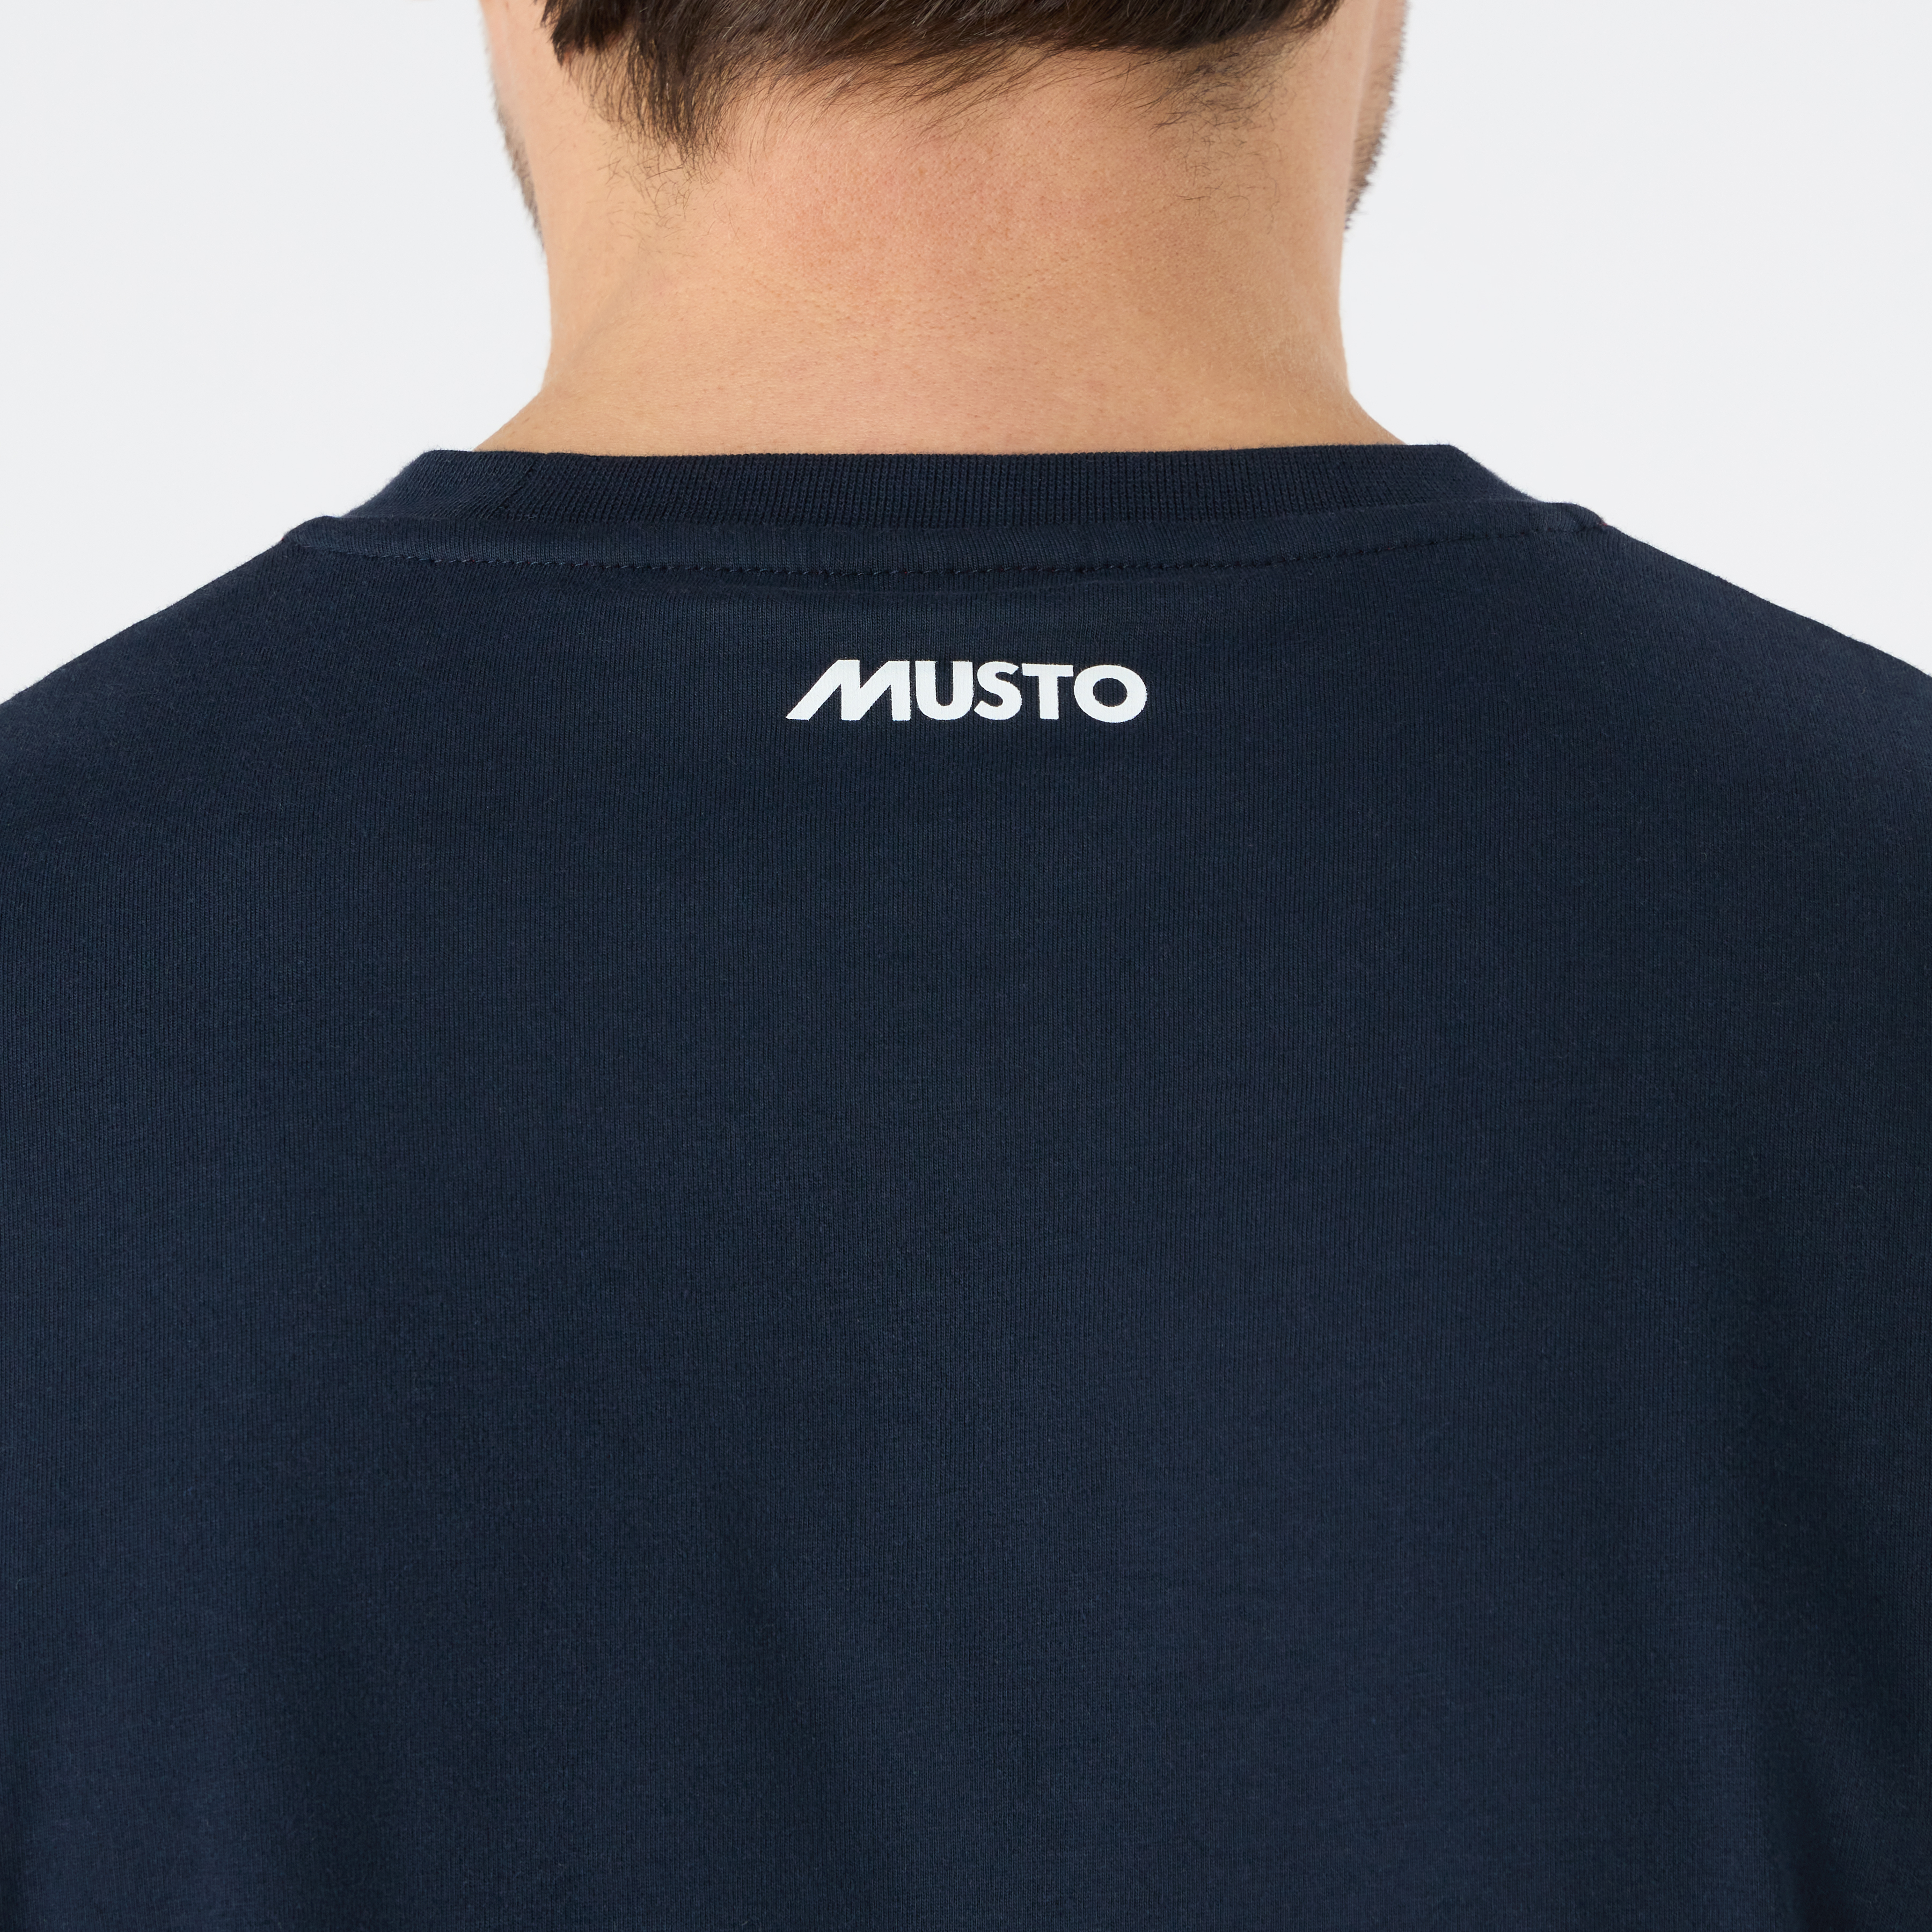 Musto1964 T-Shirt